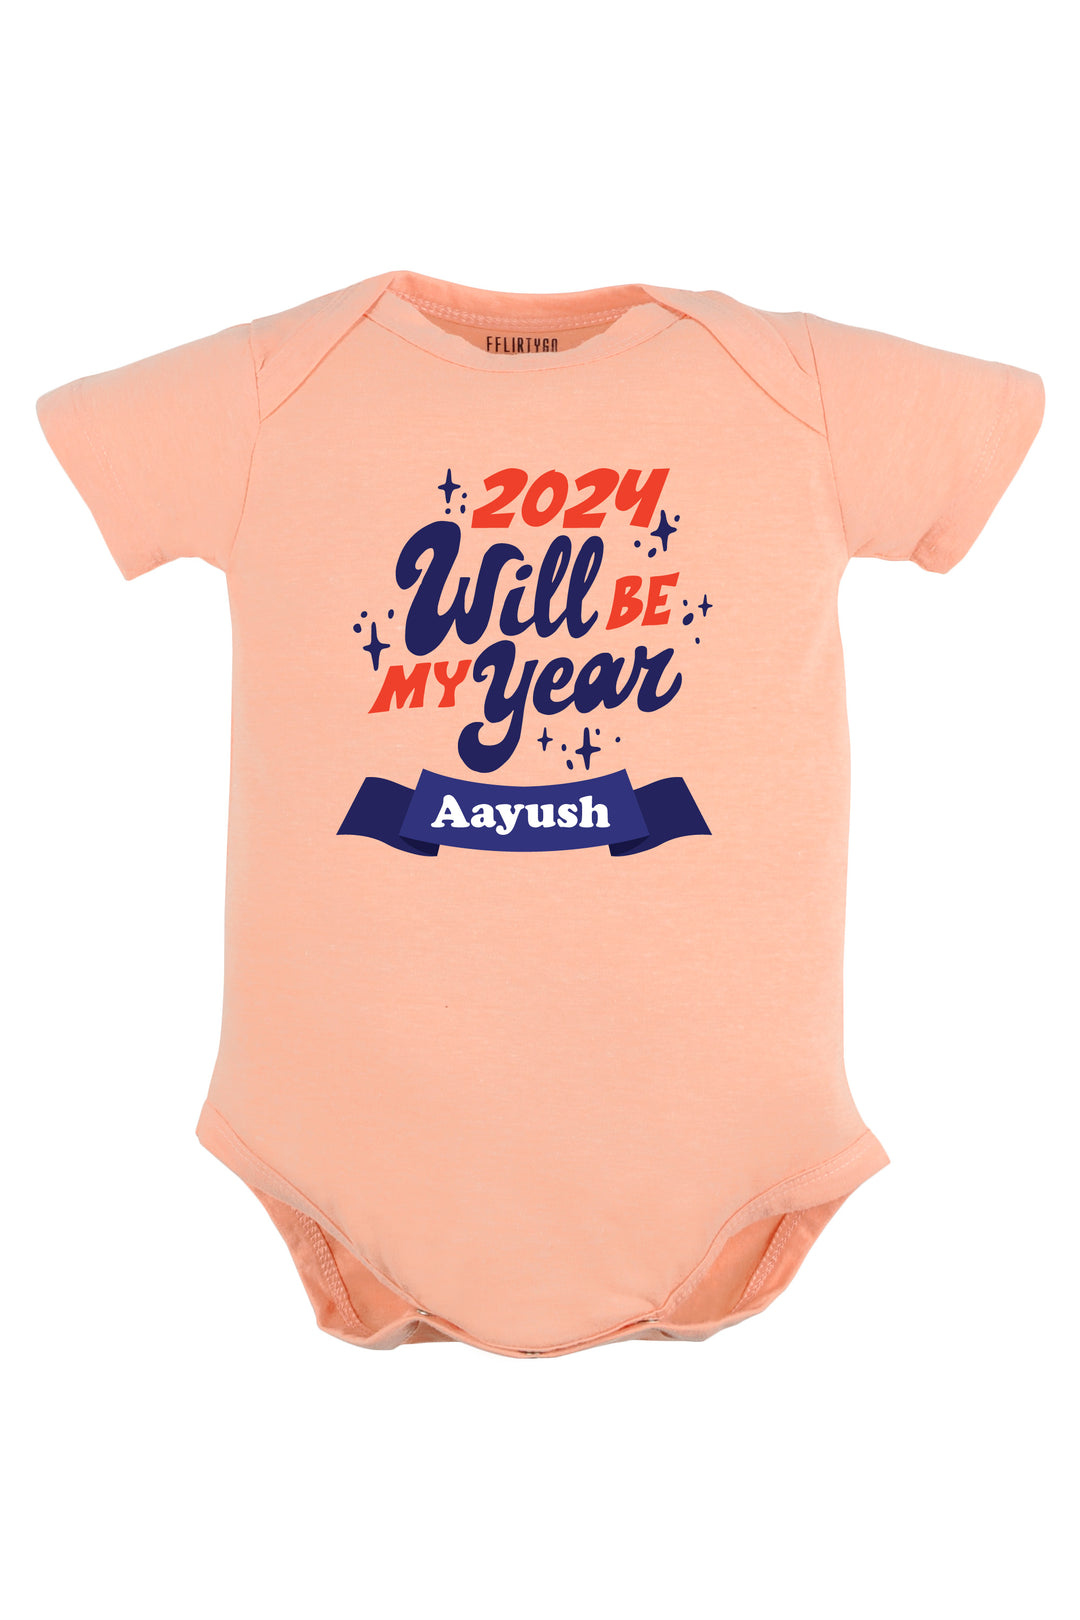 2024 Will Be My Year Baby Romper | Onesies w/ Custom Name